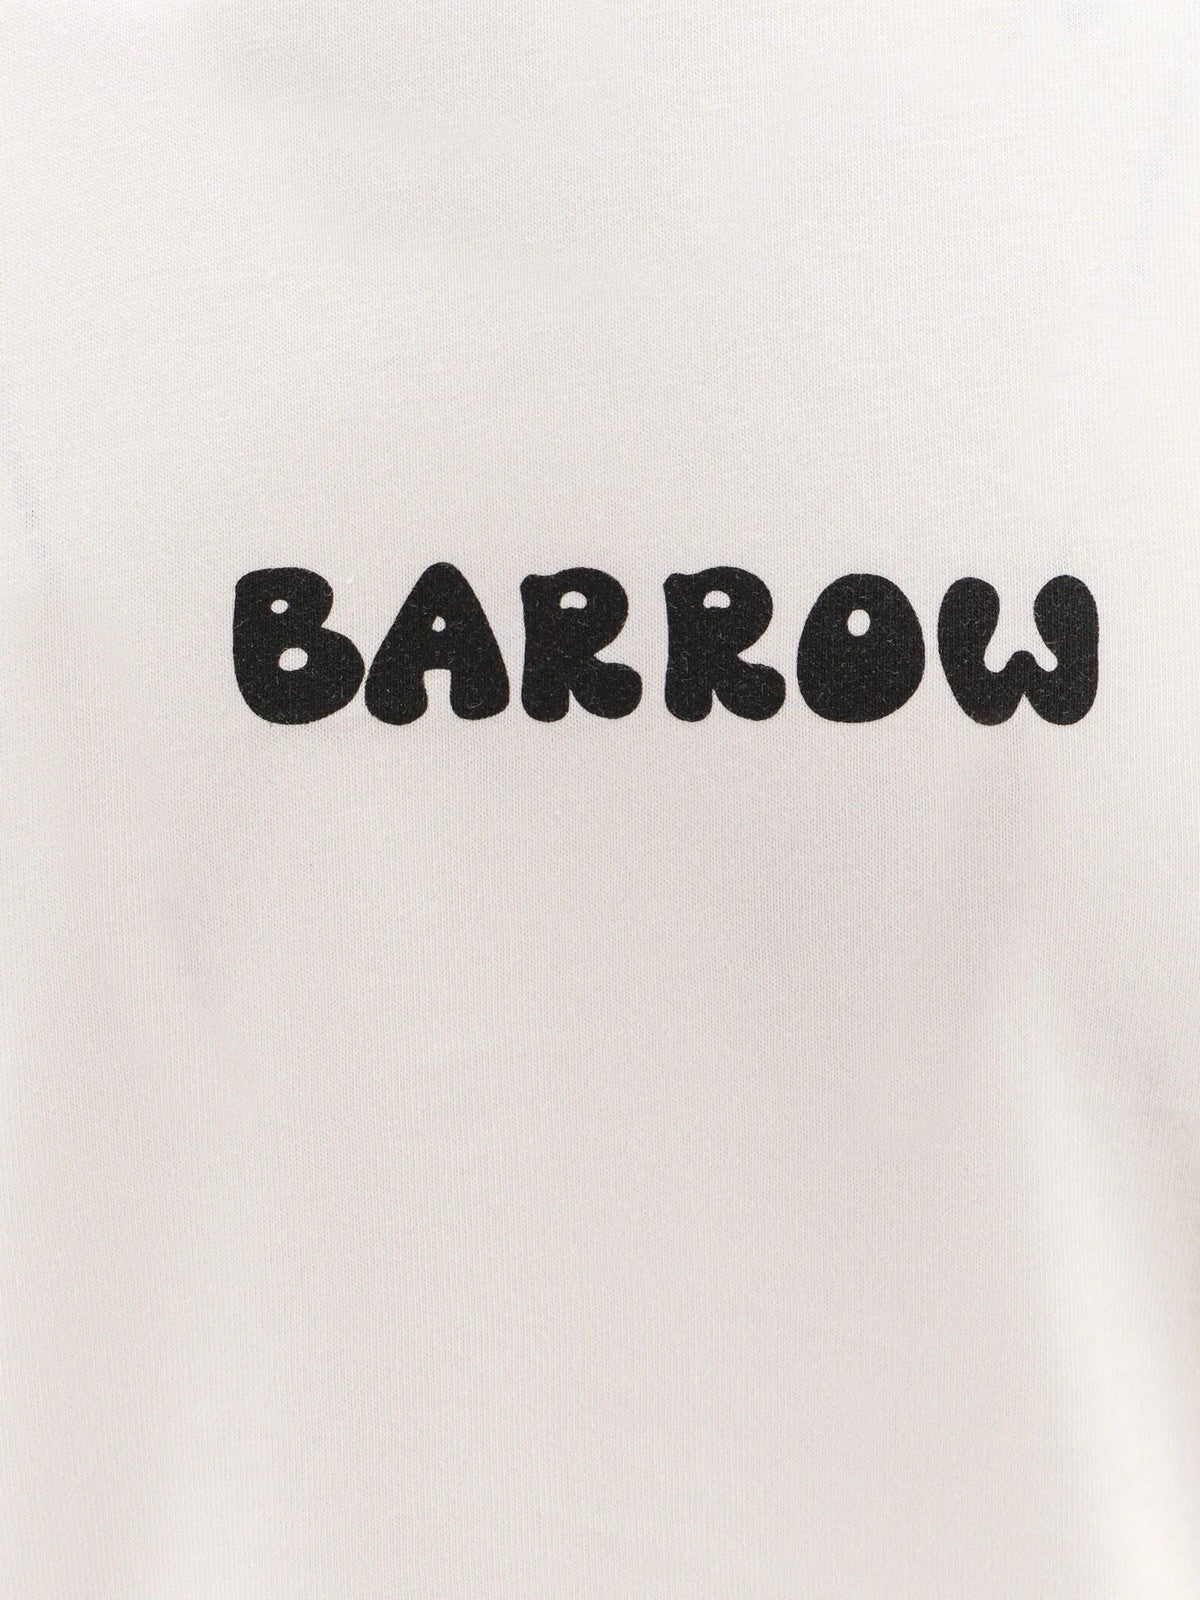 BARROW T-Shirt e Polo Uomo  S4BWUATH147 002 Bianco